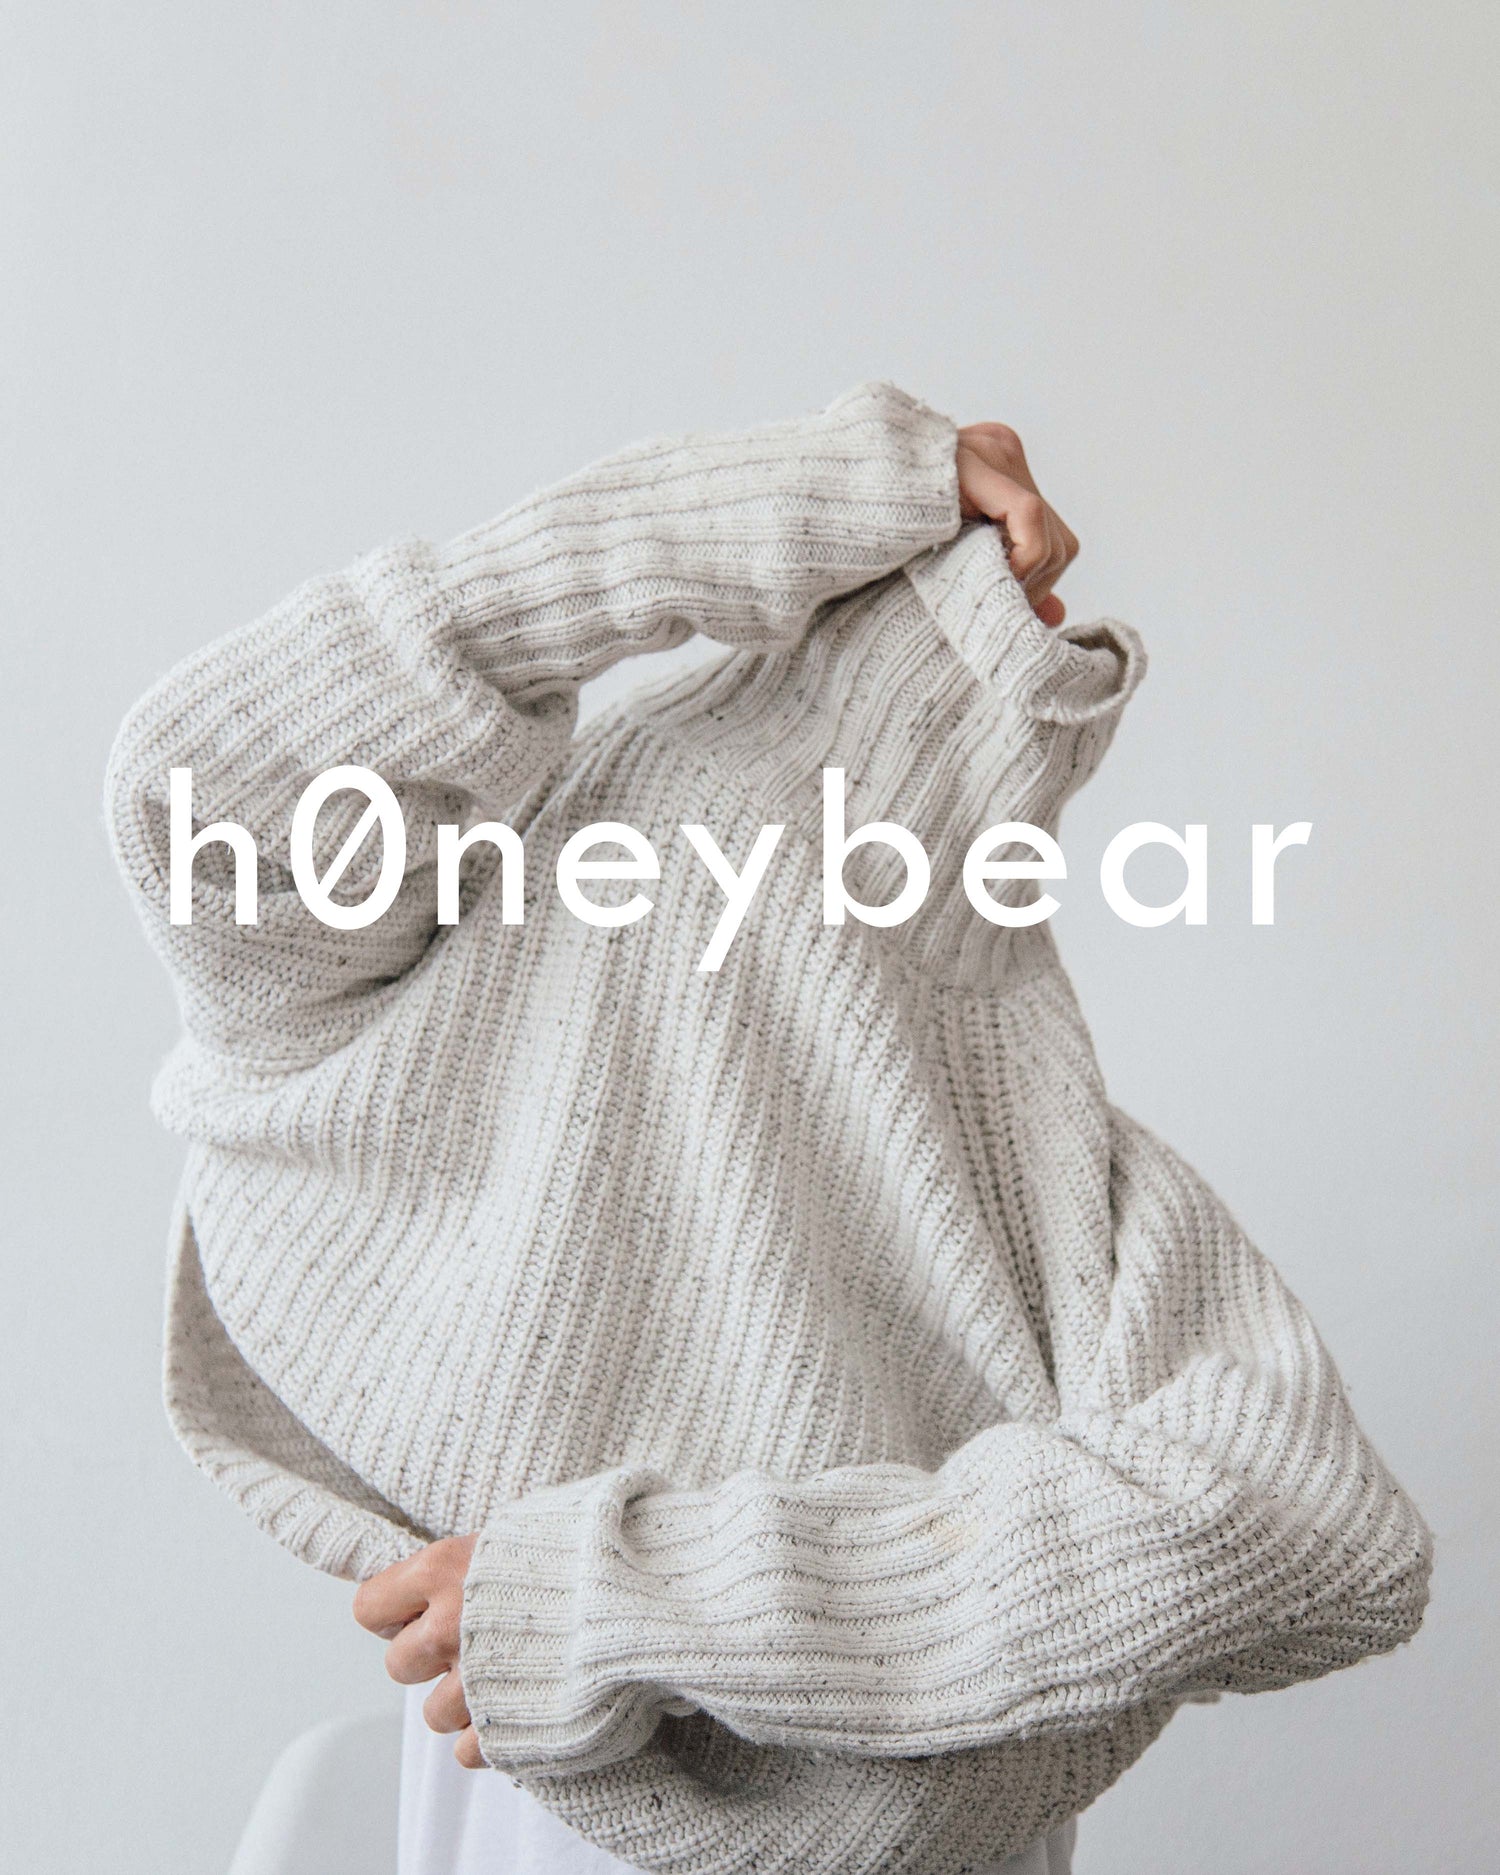 H0NEYBEAR | The Clothing Store - h0neybear.com